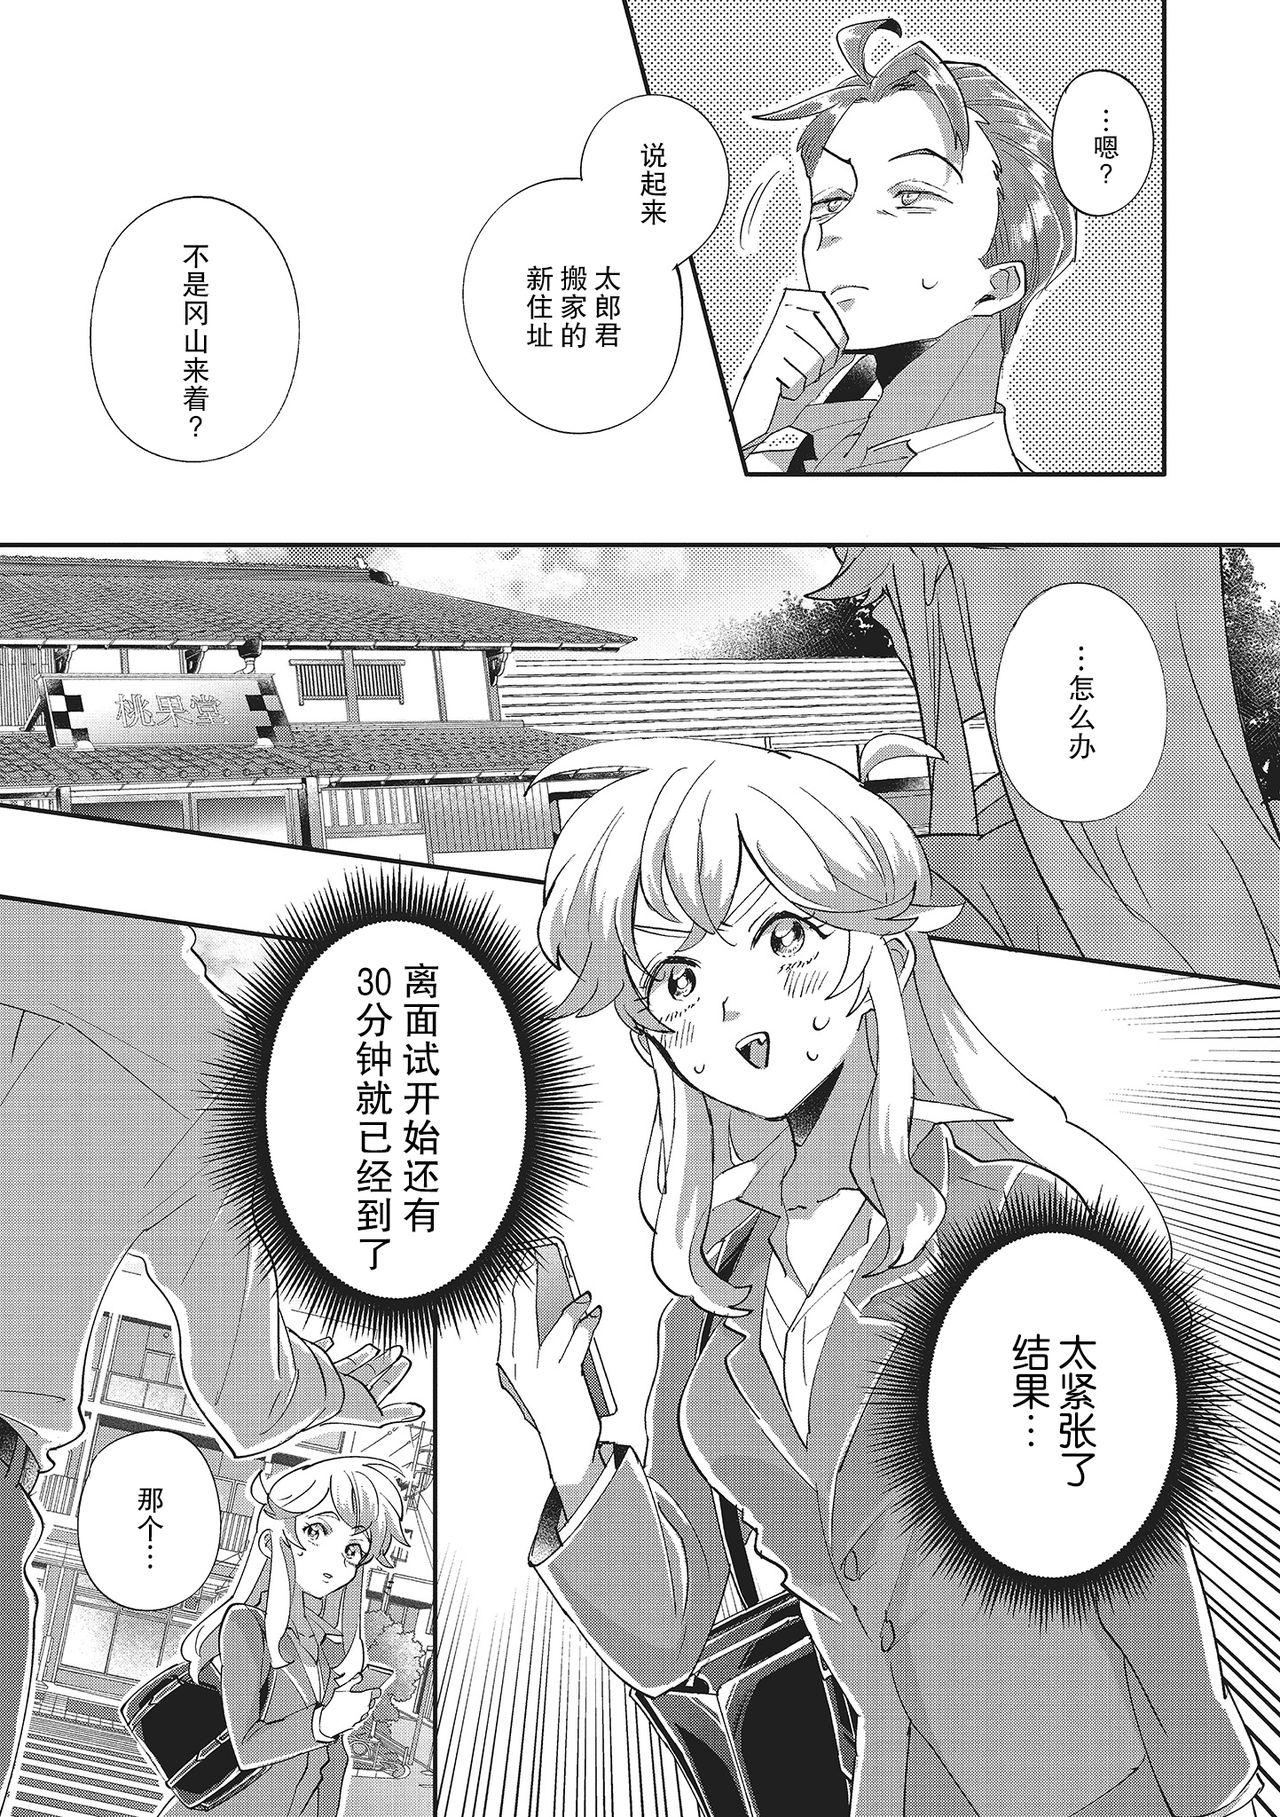 Boots Taro hime koi no hajimari hajimari | 太郎与小姬 ▪ 恋爱的开始 Vergon - Page 7